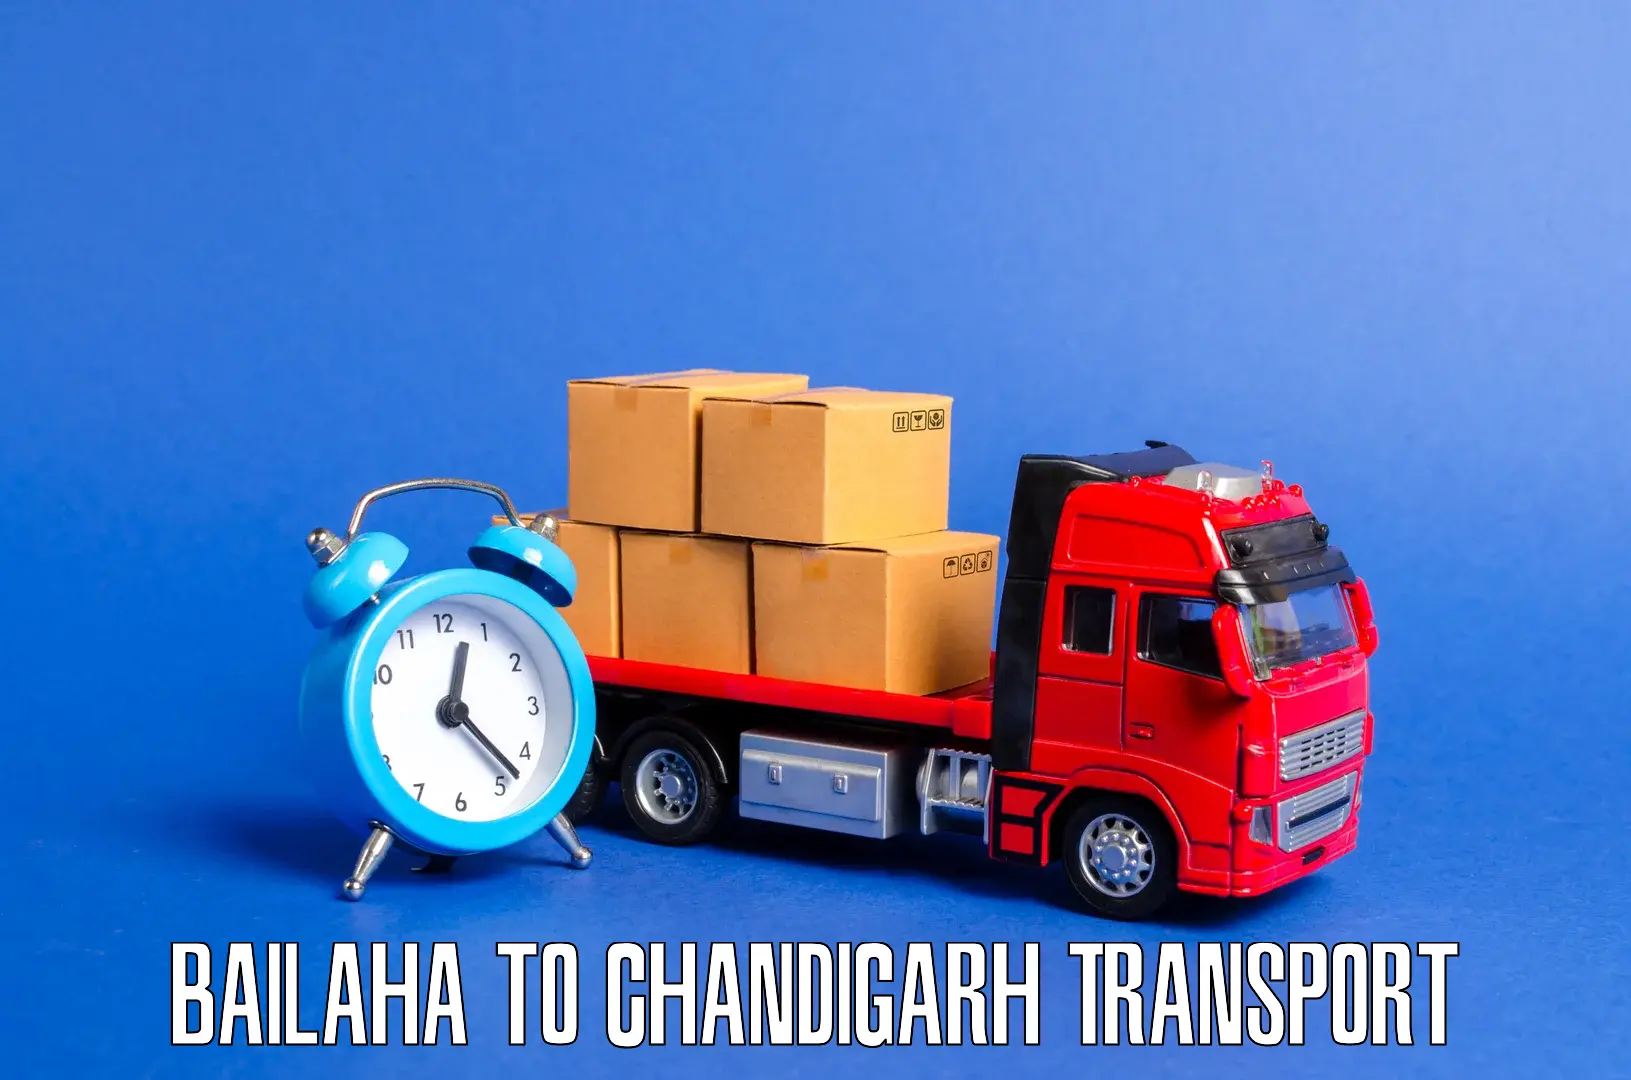 Pick up transport service Bailaha to Chandigarh